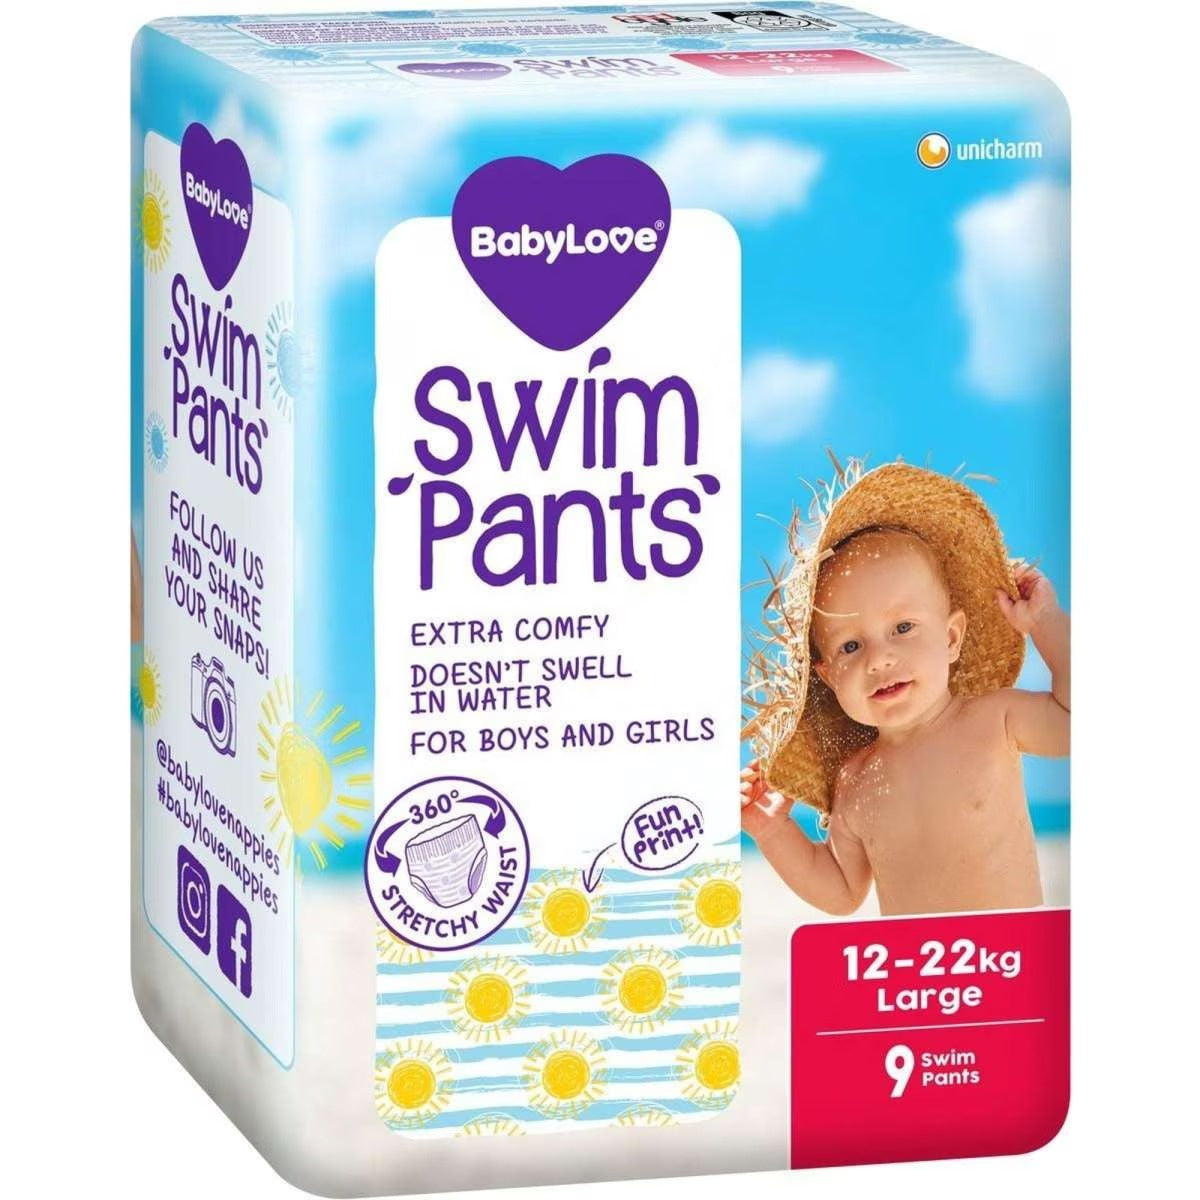 BabyLove Swim Pants Size Large 12-22kg 9pk